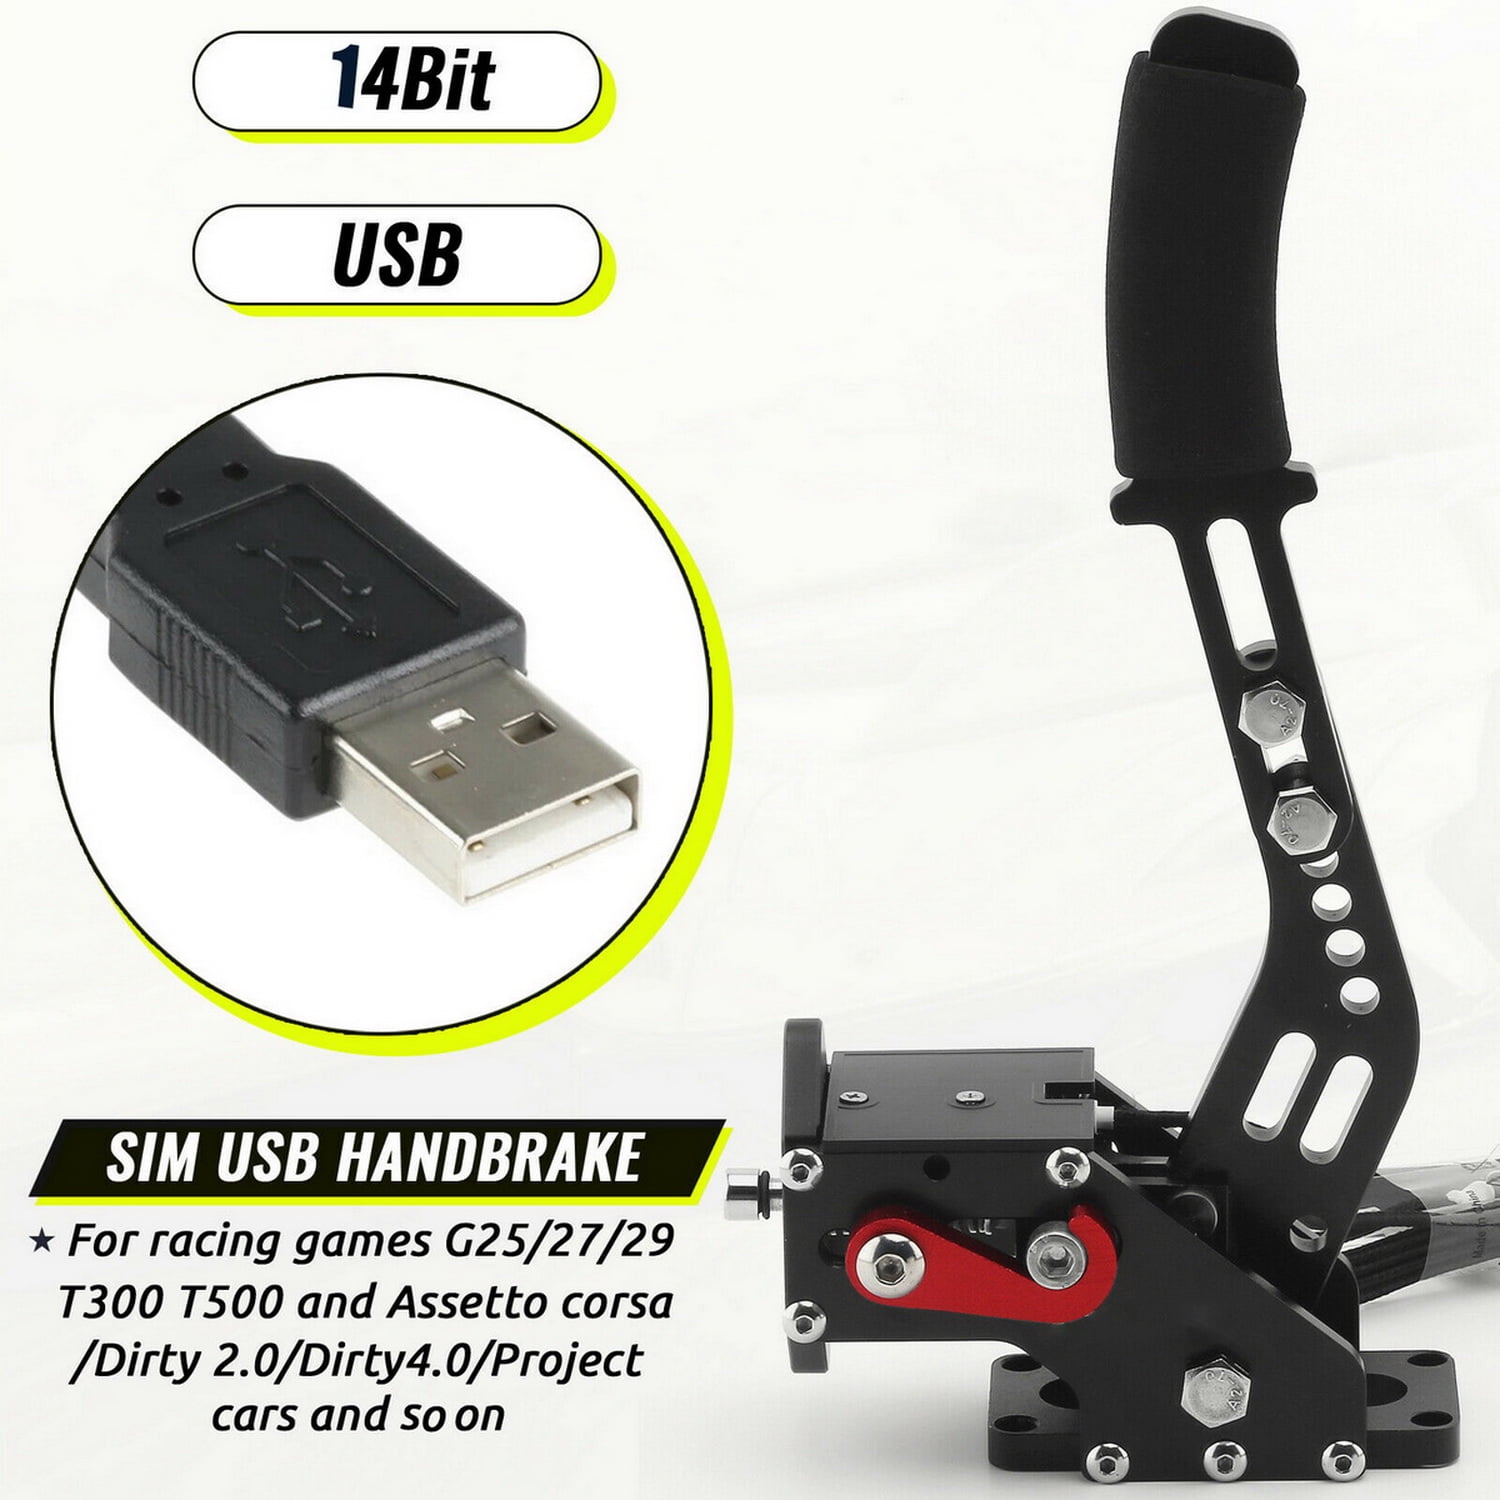 14Bit USB Handbrake for PC Windows for Sim Racing Games G25/G27